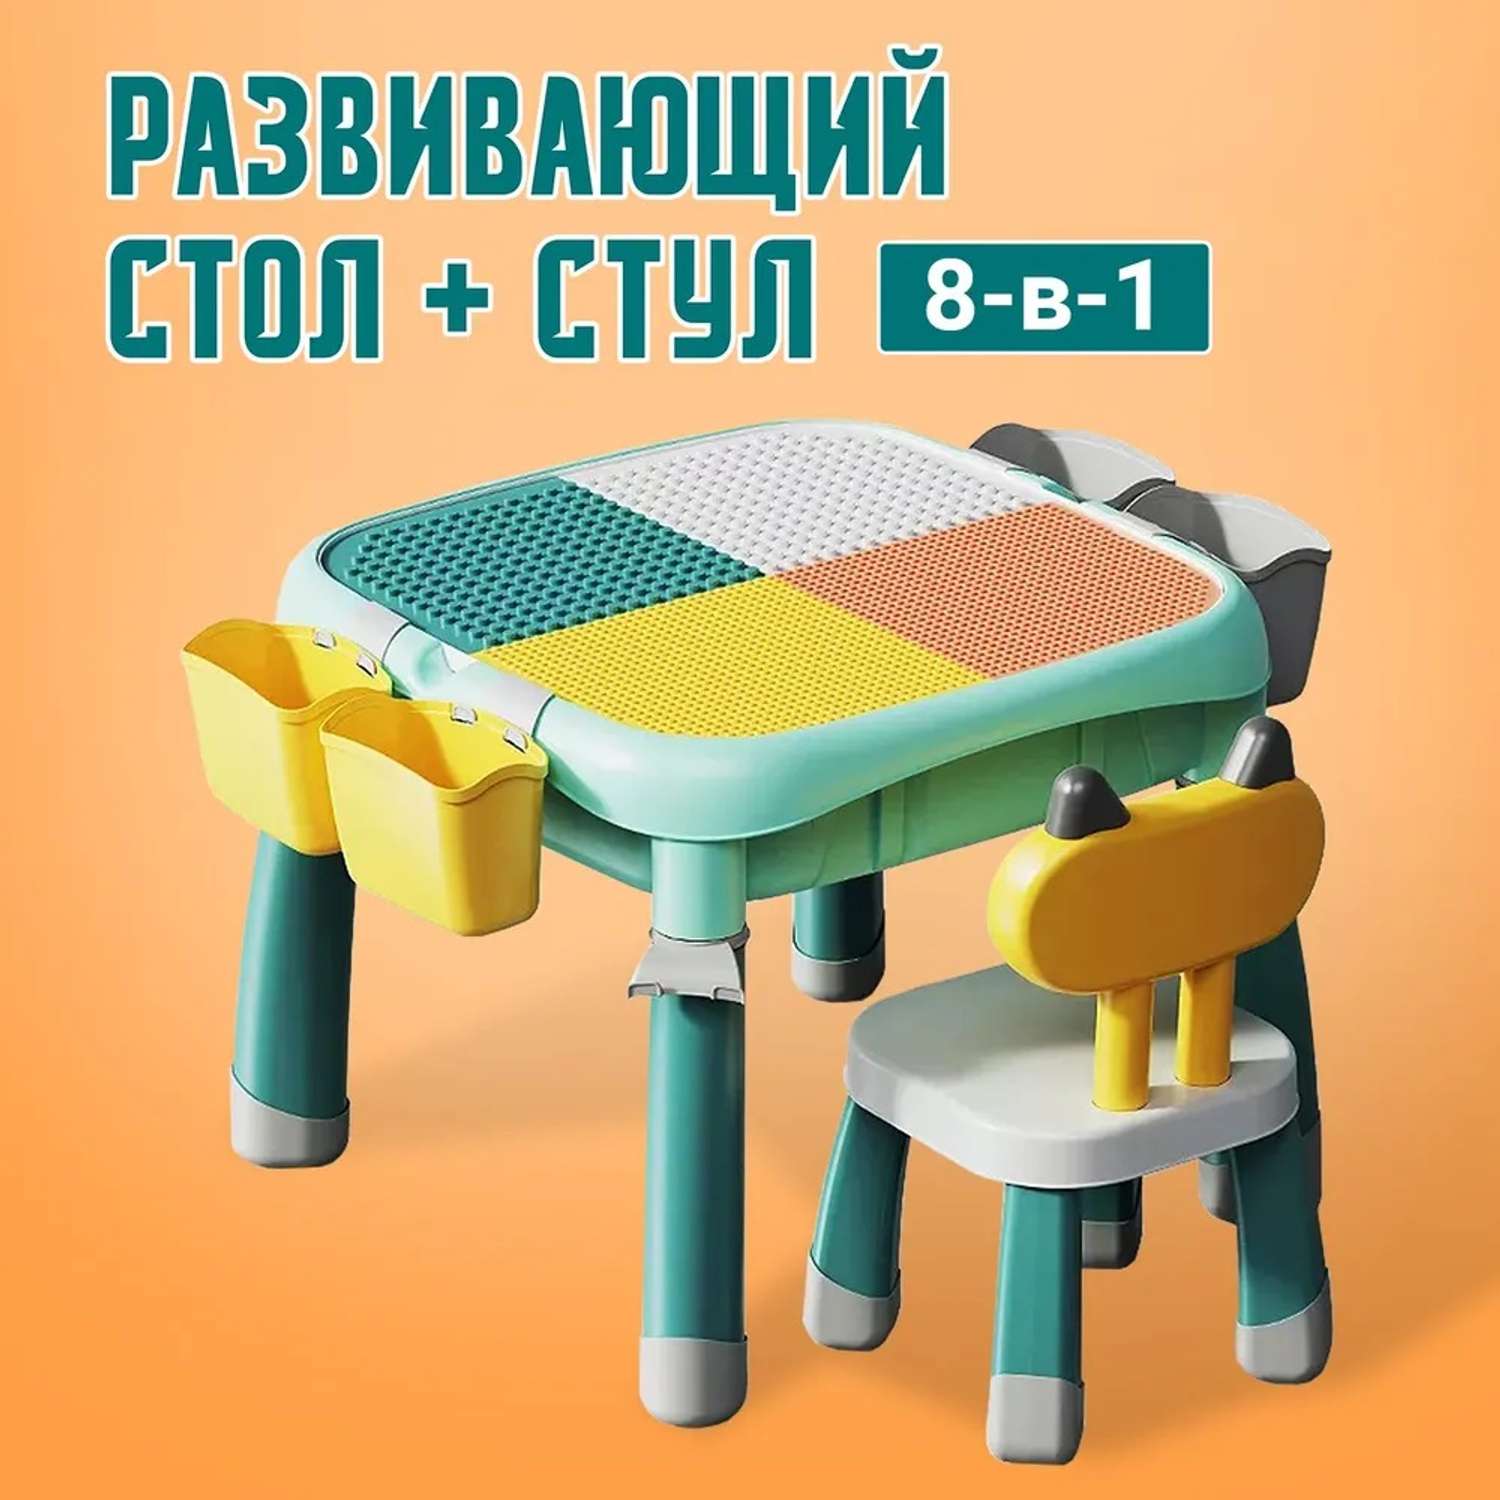 Развивающий детский стол ТЕХНО со стулом для конструктора Лего - фото 1